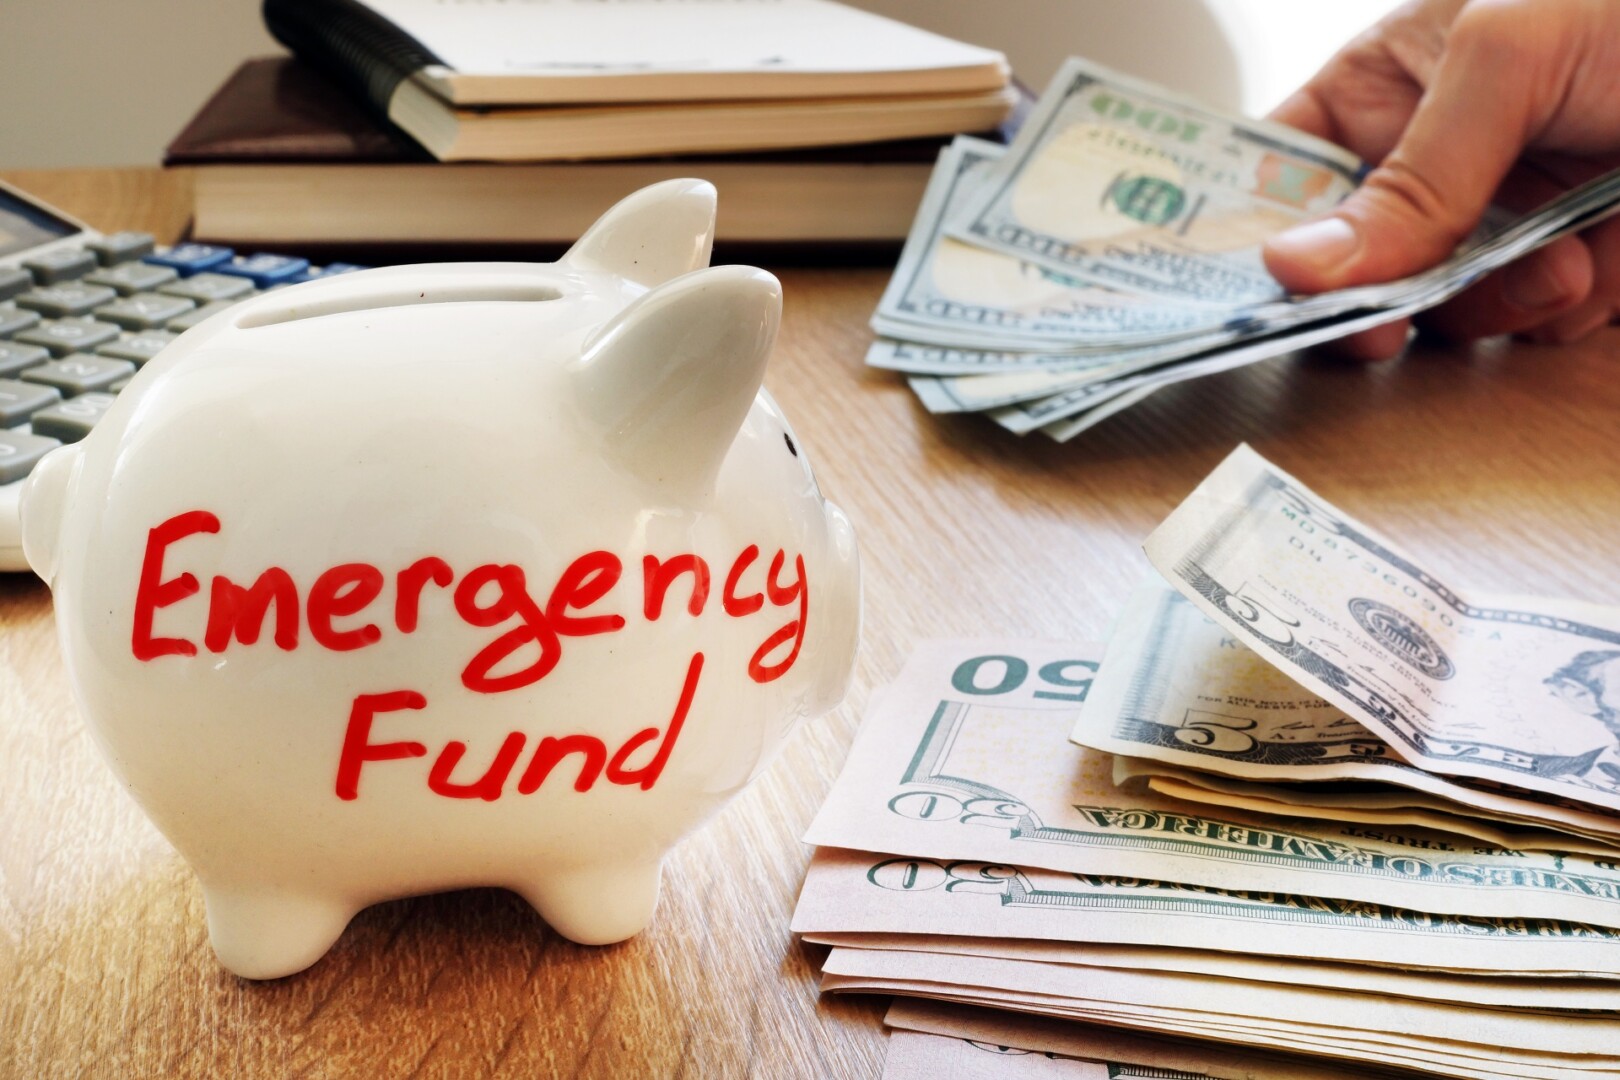 Emergency Fund Written On A Piggy Bank.